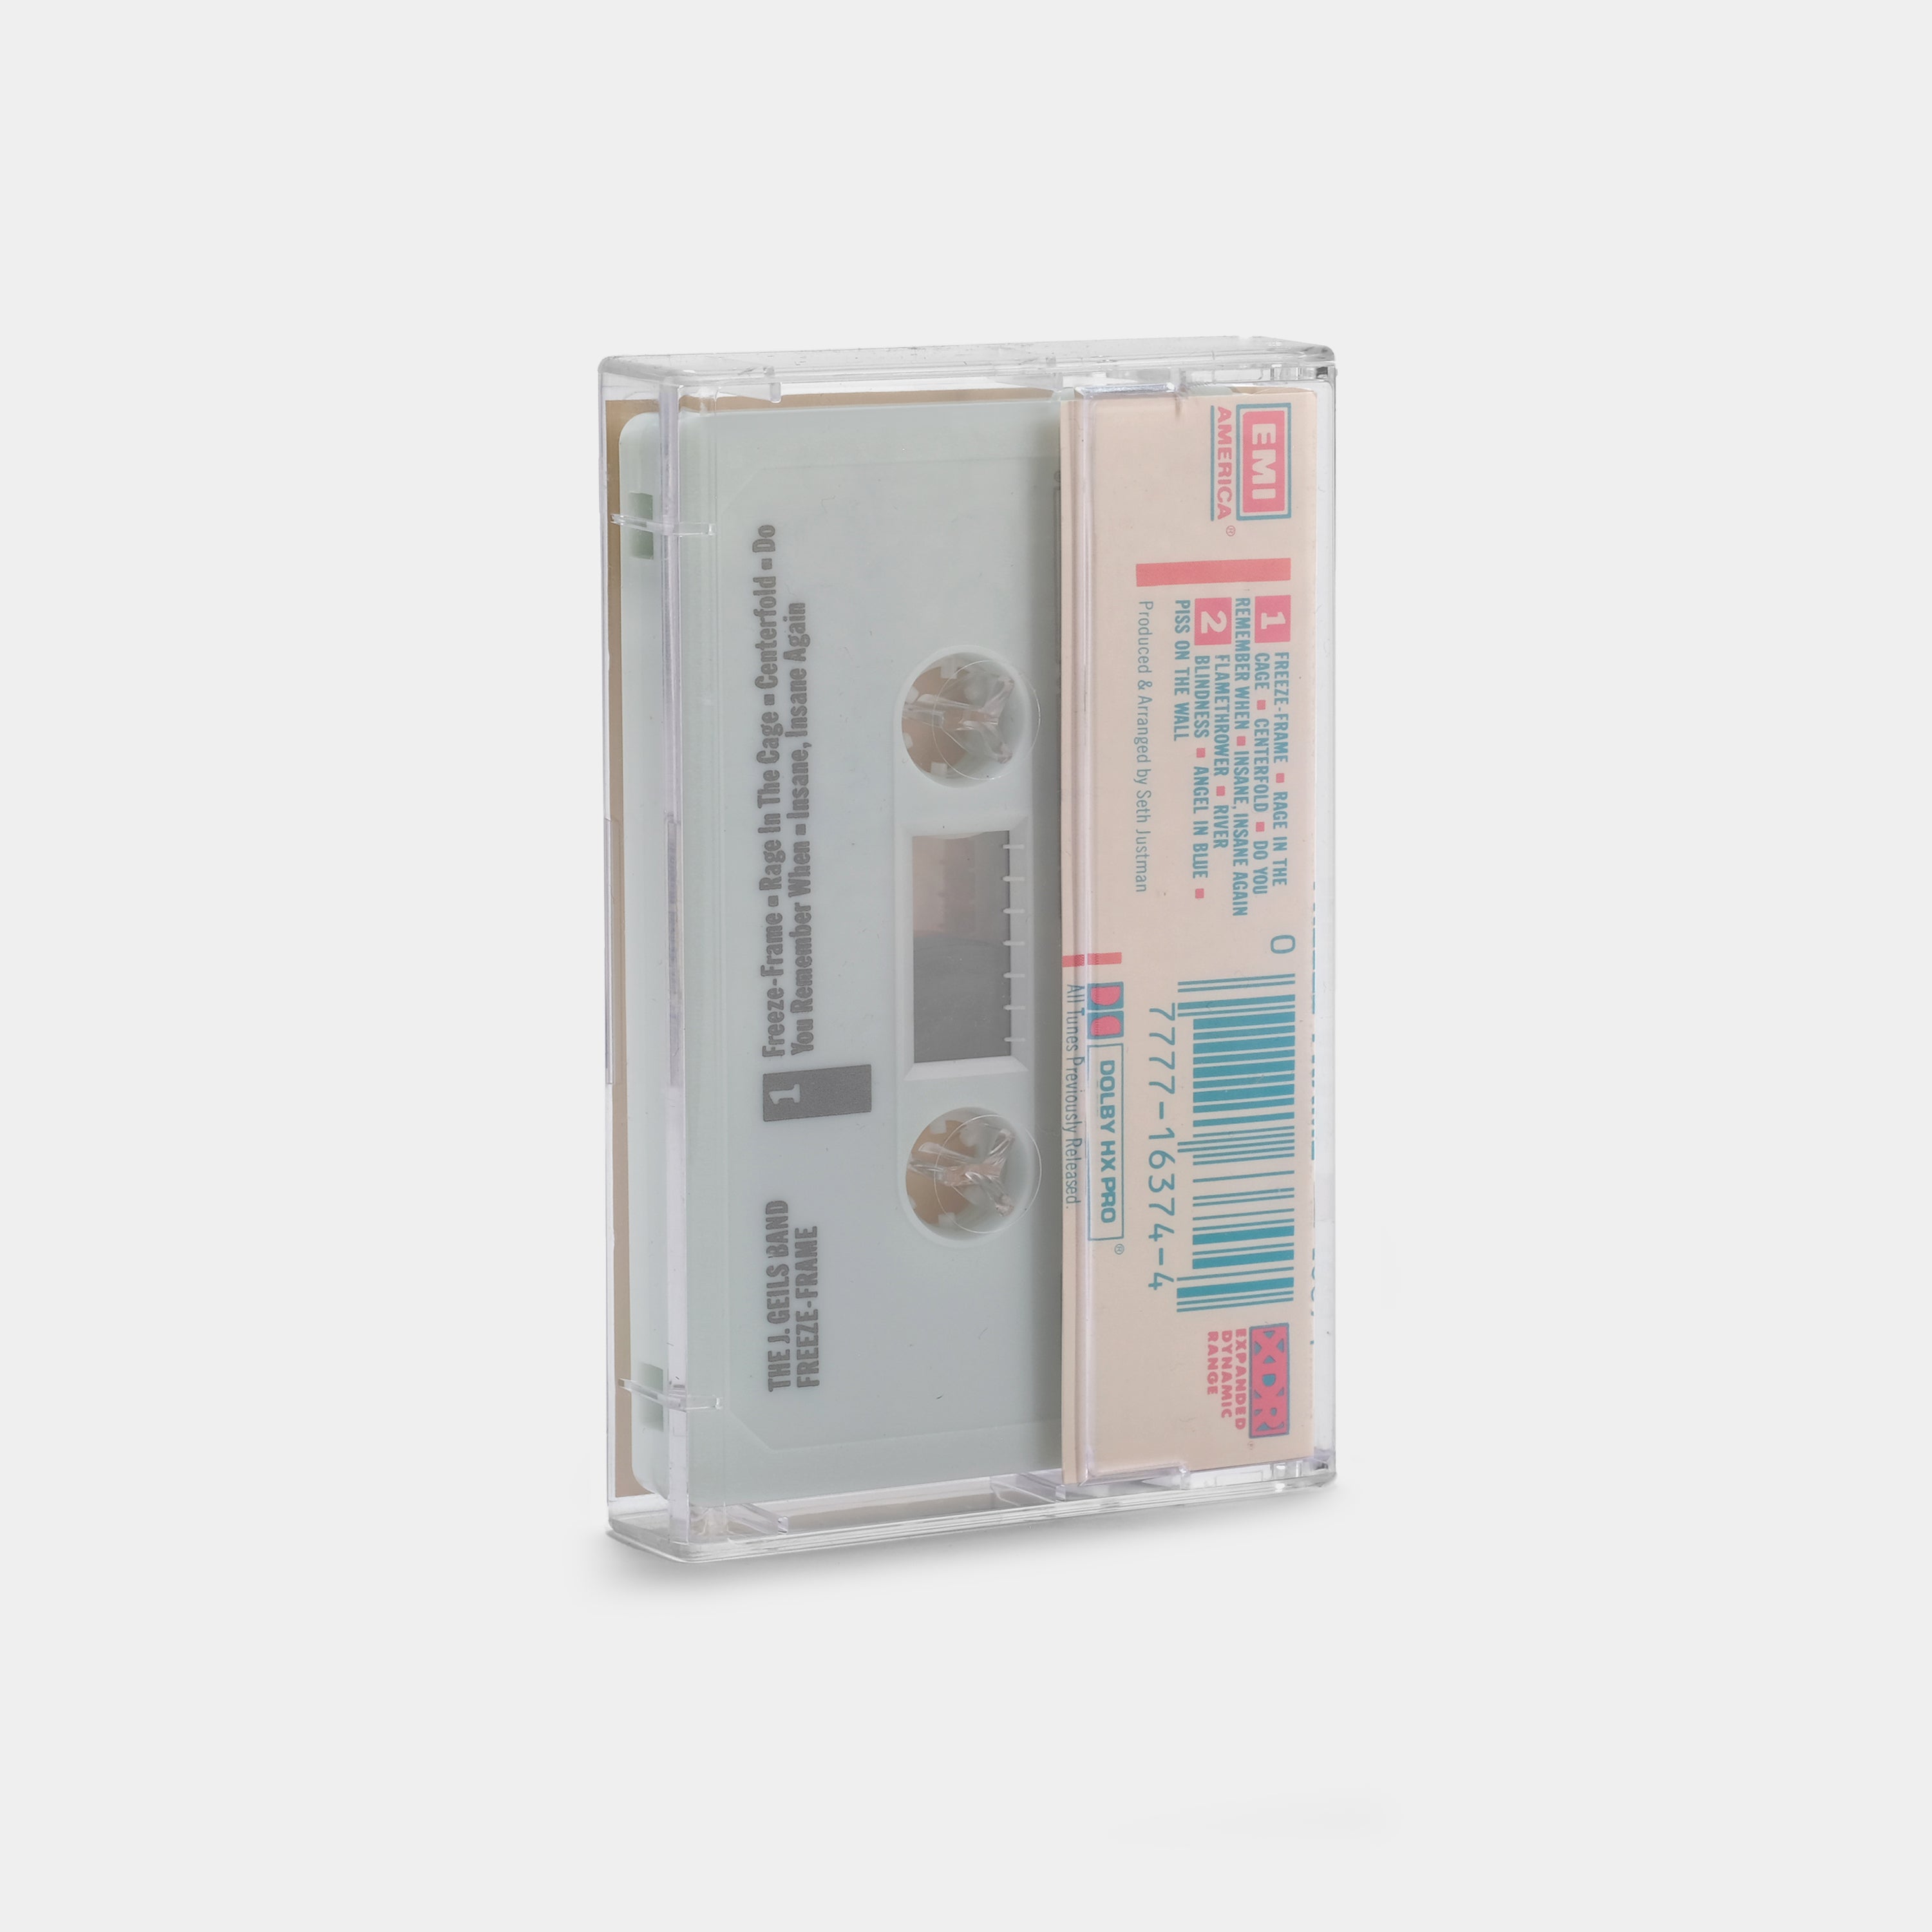 The J. Geils Band - Freeze Frame Cassette Tape